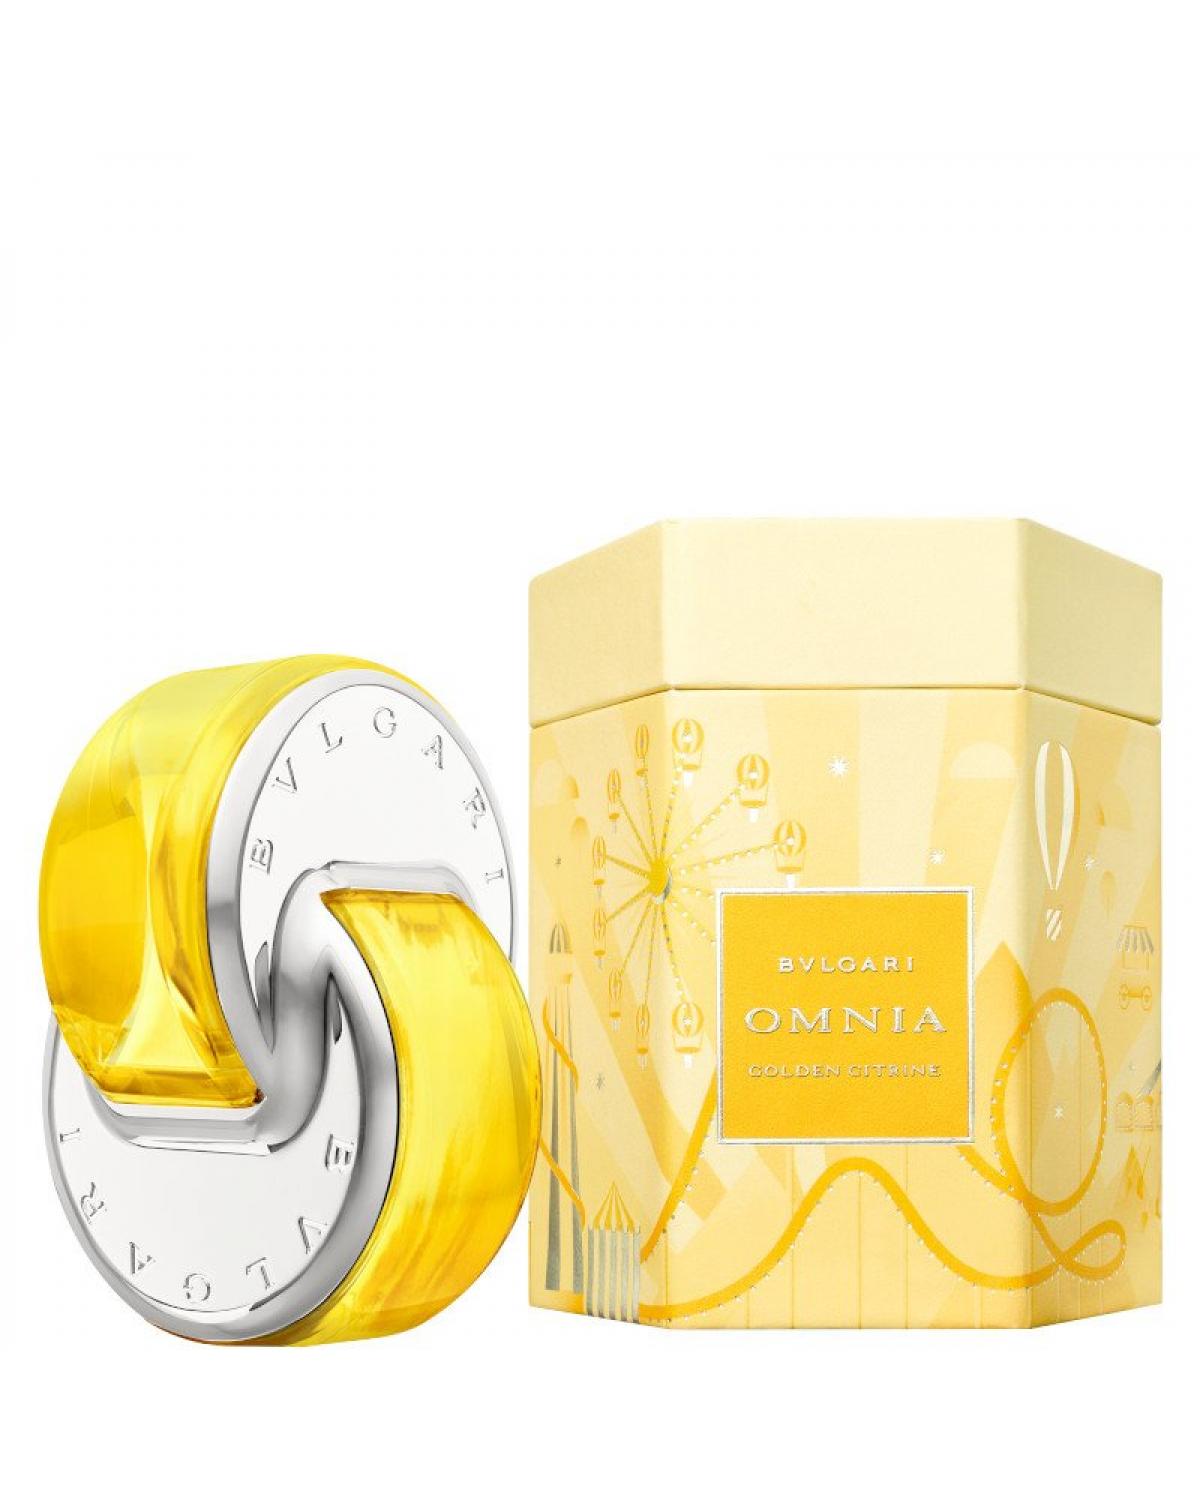 Omnia Golden Citrine Omnialand Bvlgari Perfume Feminino EDT - 40ml